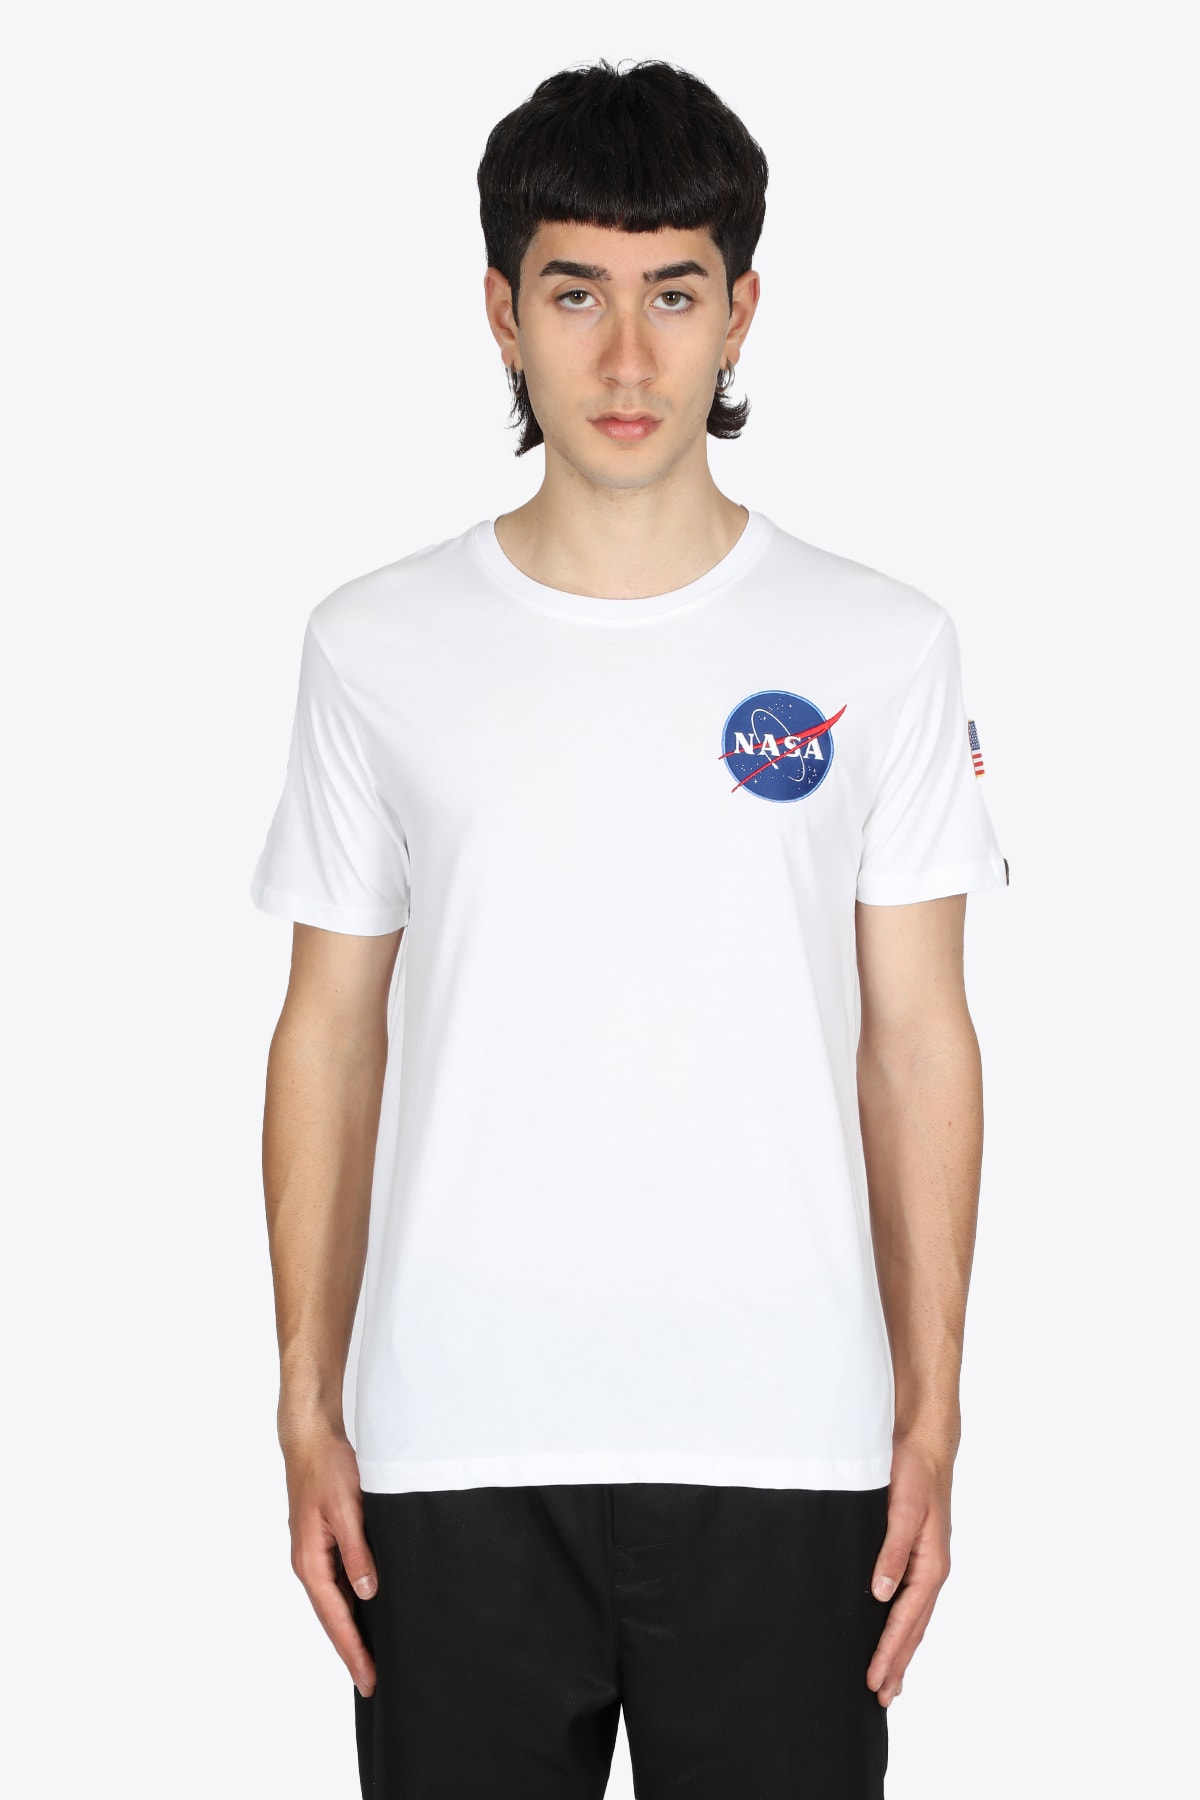 Alpha Industries Space Shuttle T-shirt White cotton space shuttle t-shirt